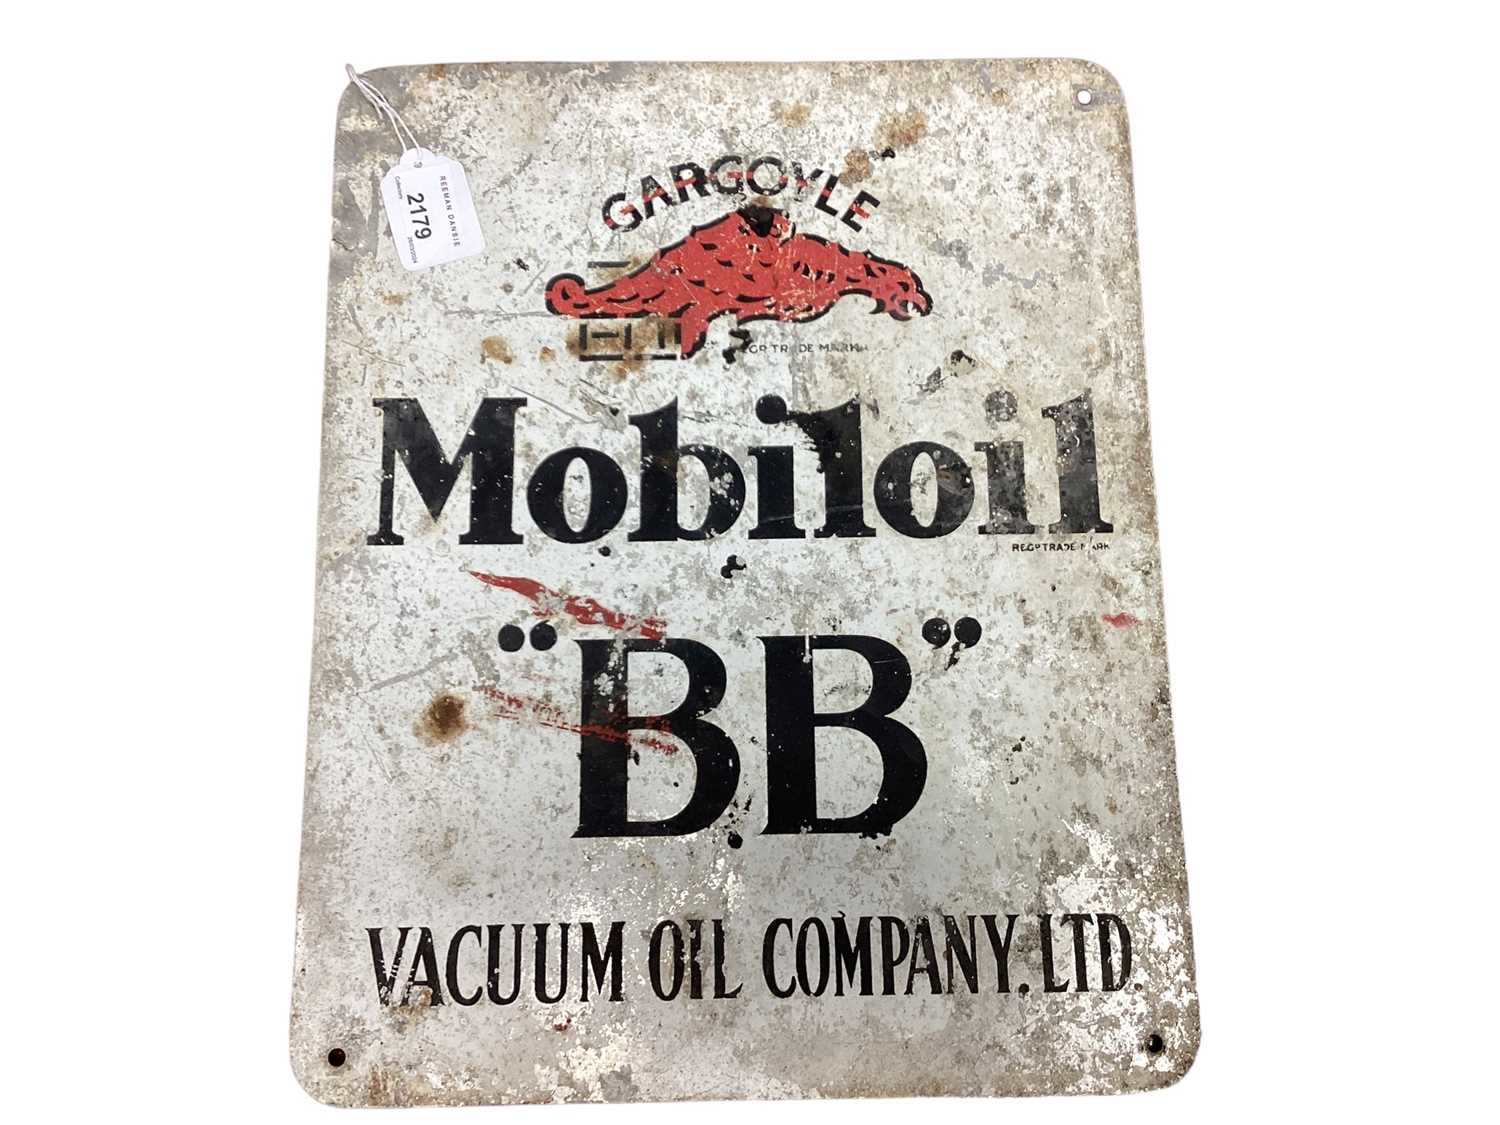 Original 'Gargoyle Mobiloil "BB"' Vacuum Oil Company Ltd' metal sign, 38 x 30.5cm